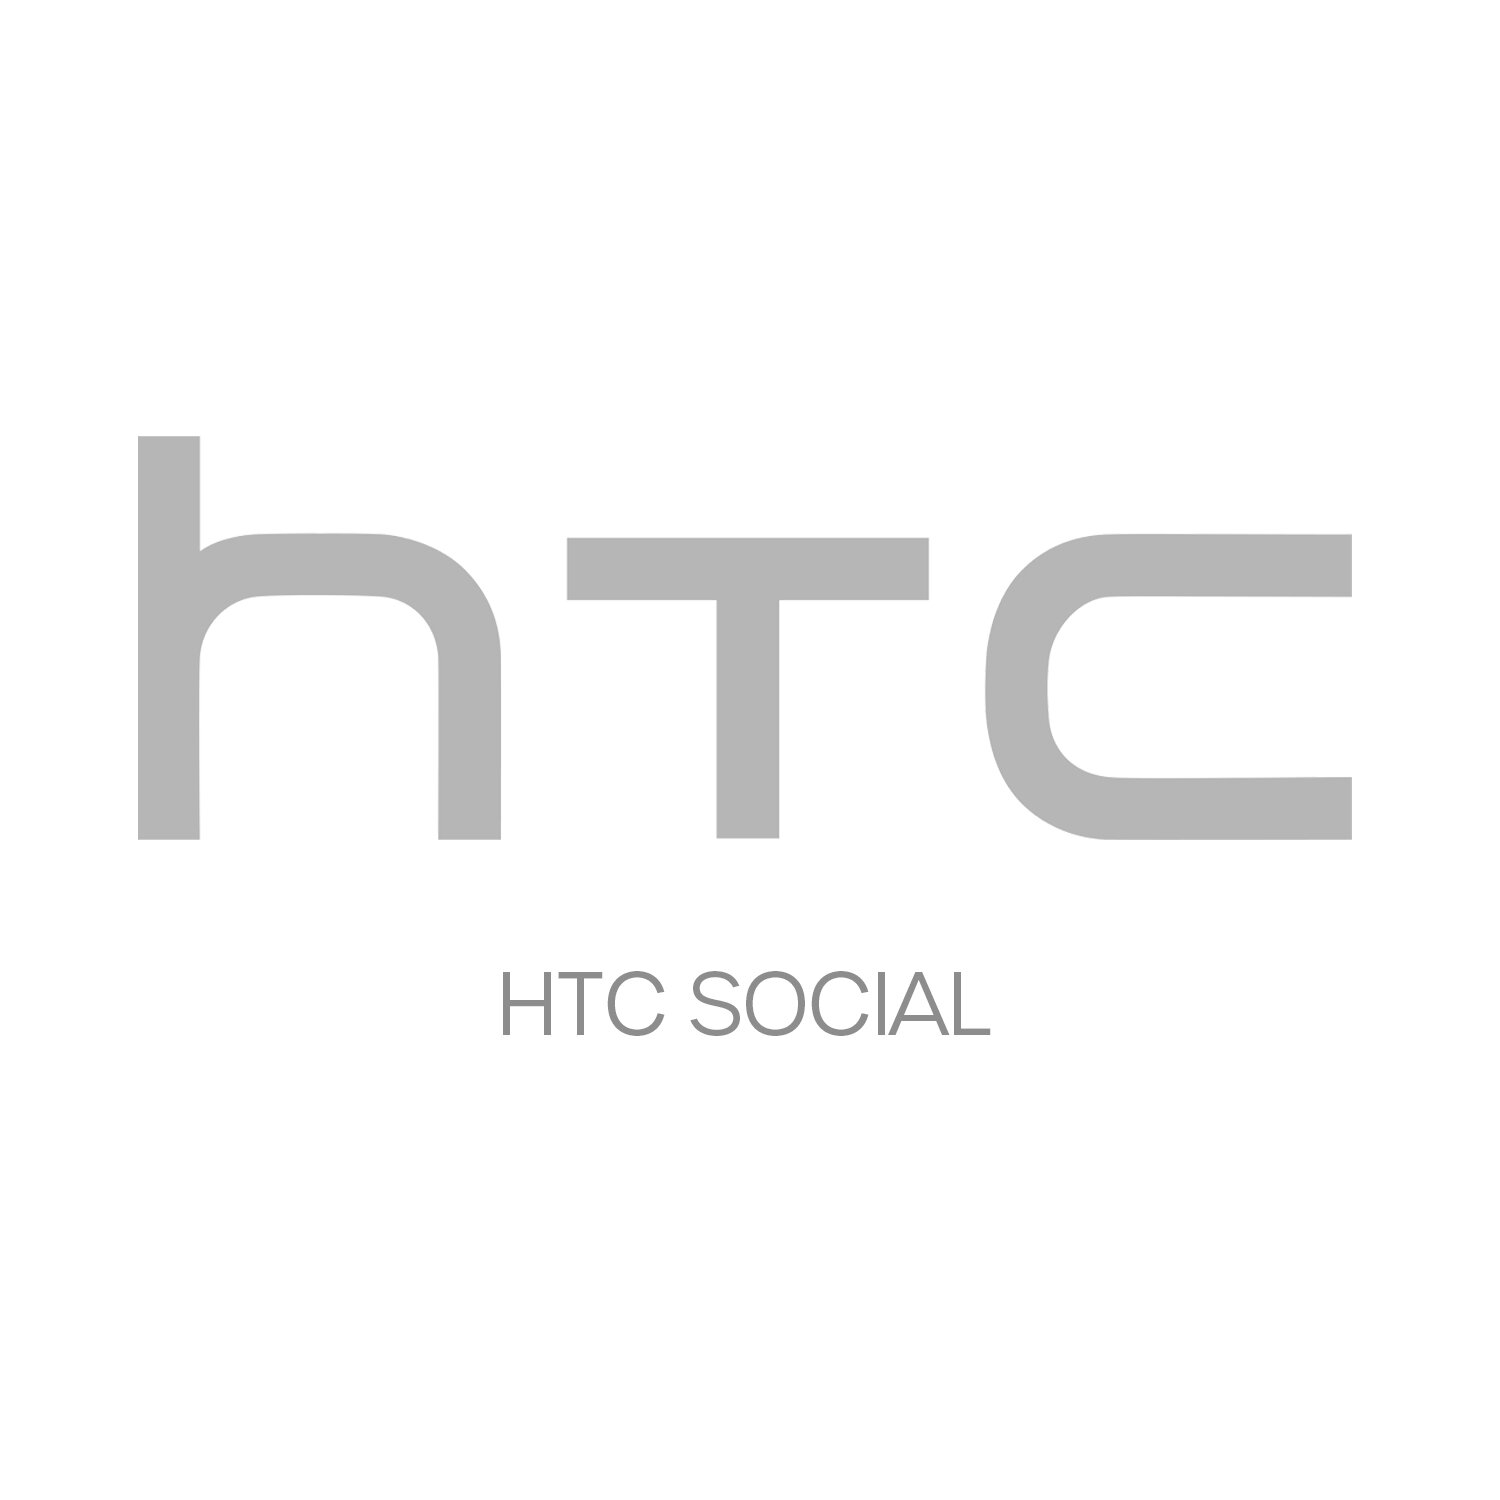 HTC-SOCIAL.jpg